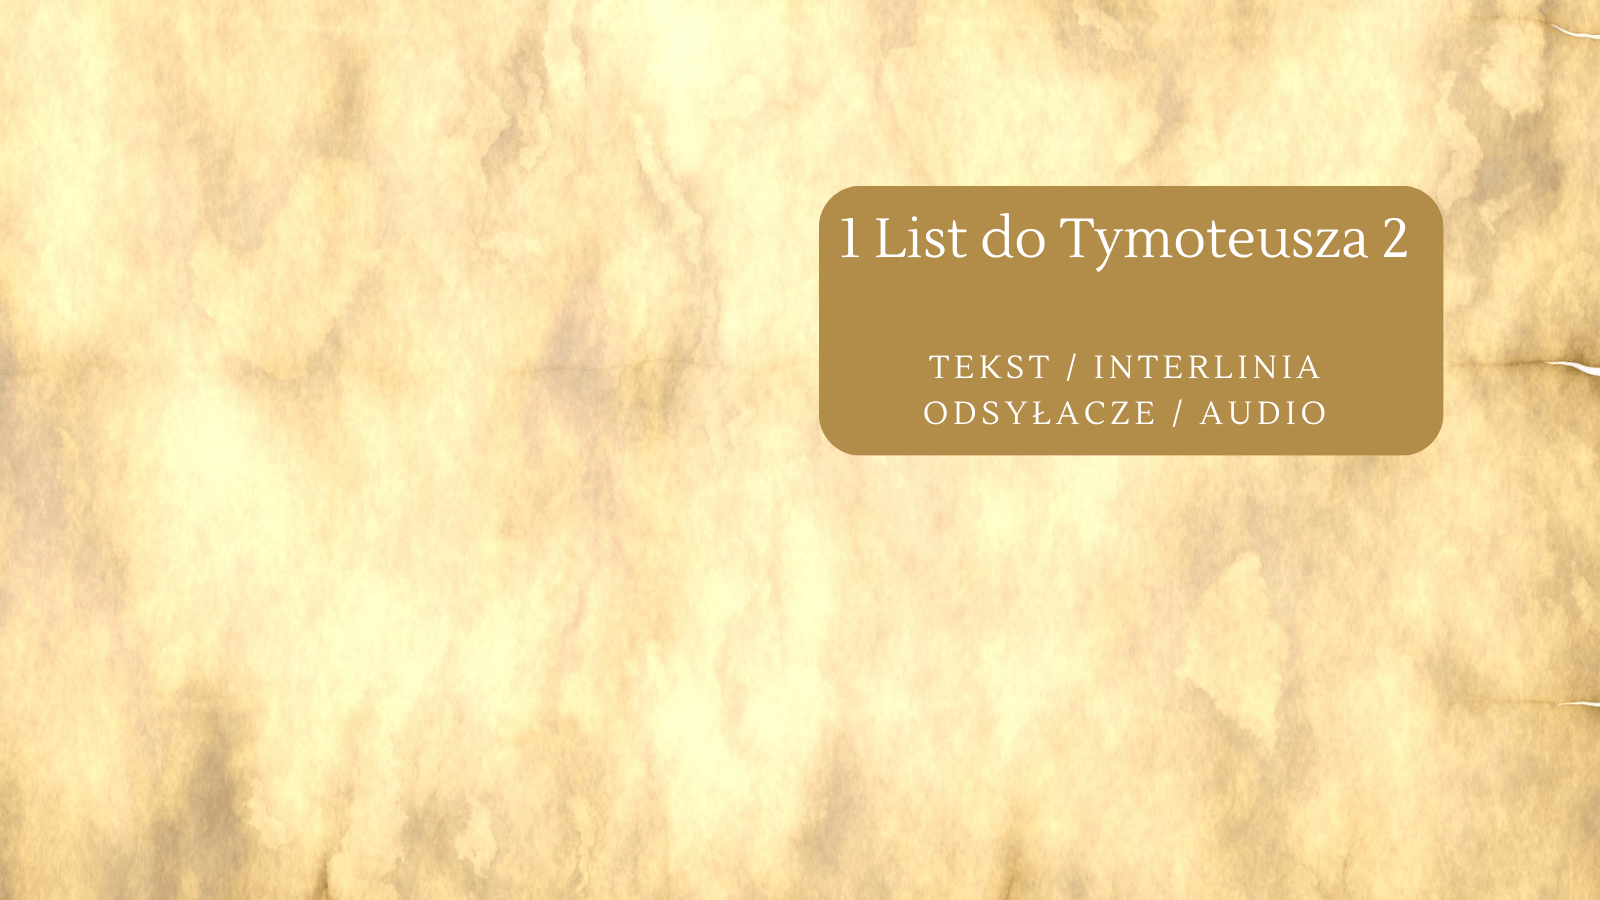 1 List do Tymoteusza 2